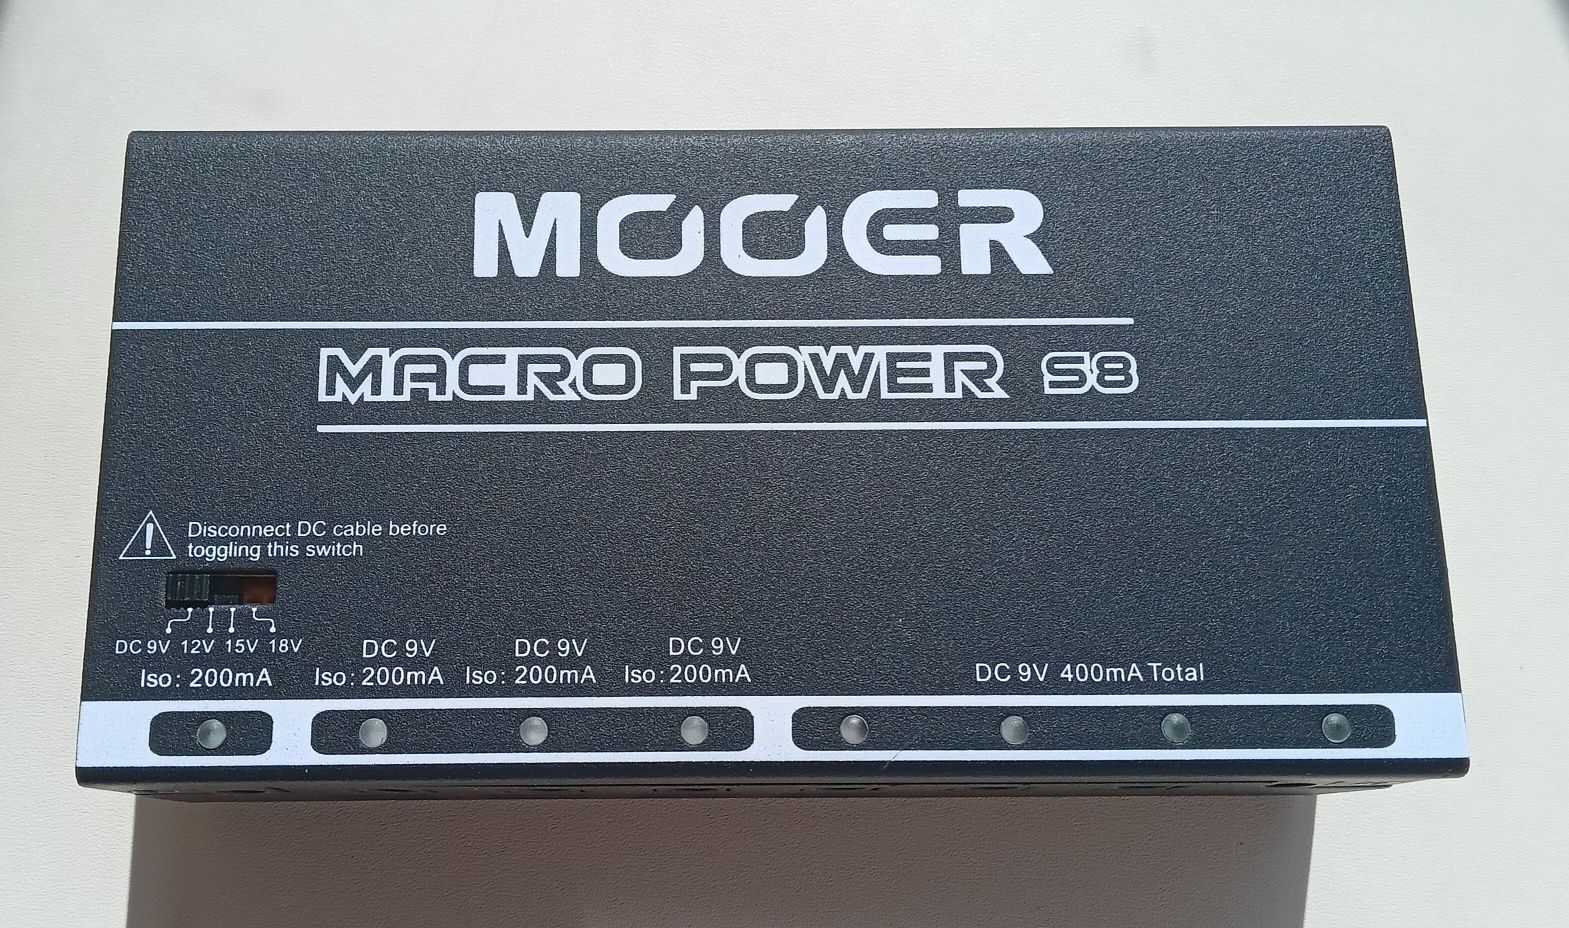 mooer macro power s8 пауэрплант/питание для педалей